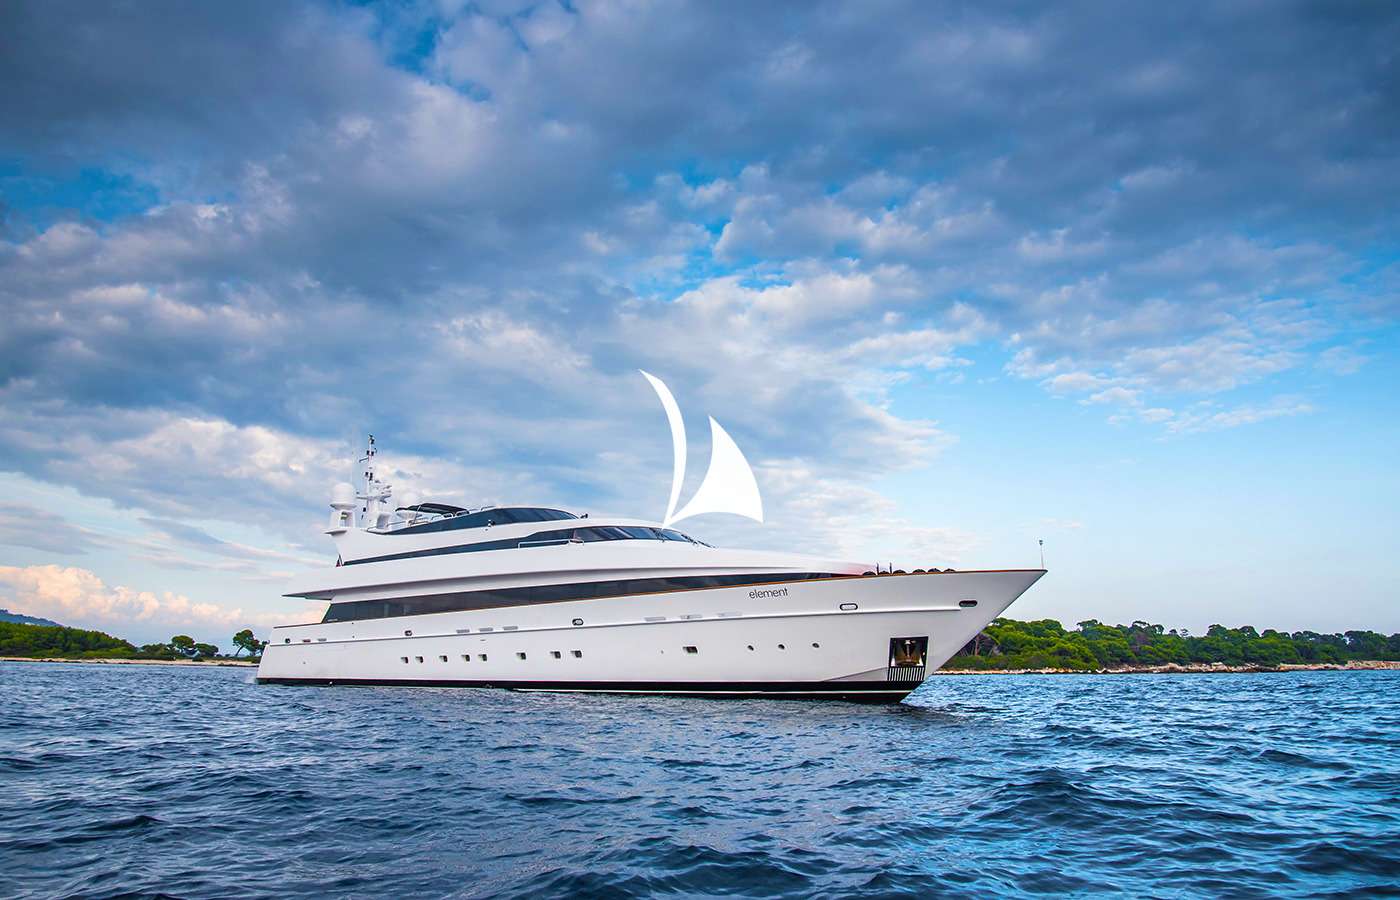 Element luxury crewed motor yacht charter cruising in Greece